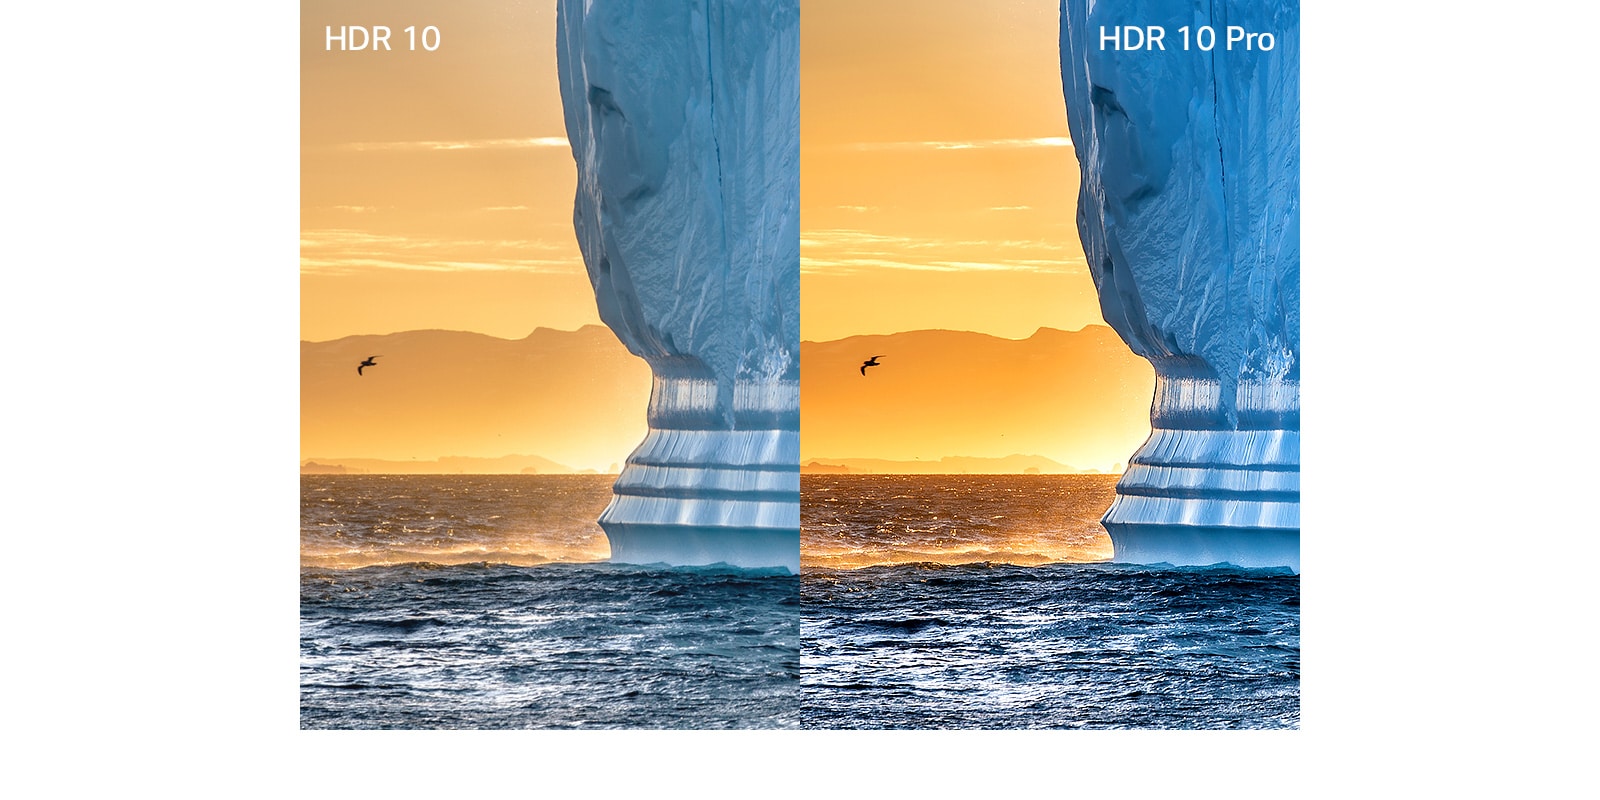 Porównanie obrazu HDR10 i HDR10 Pro